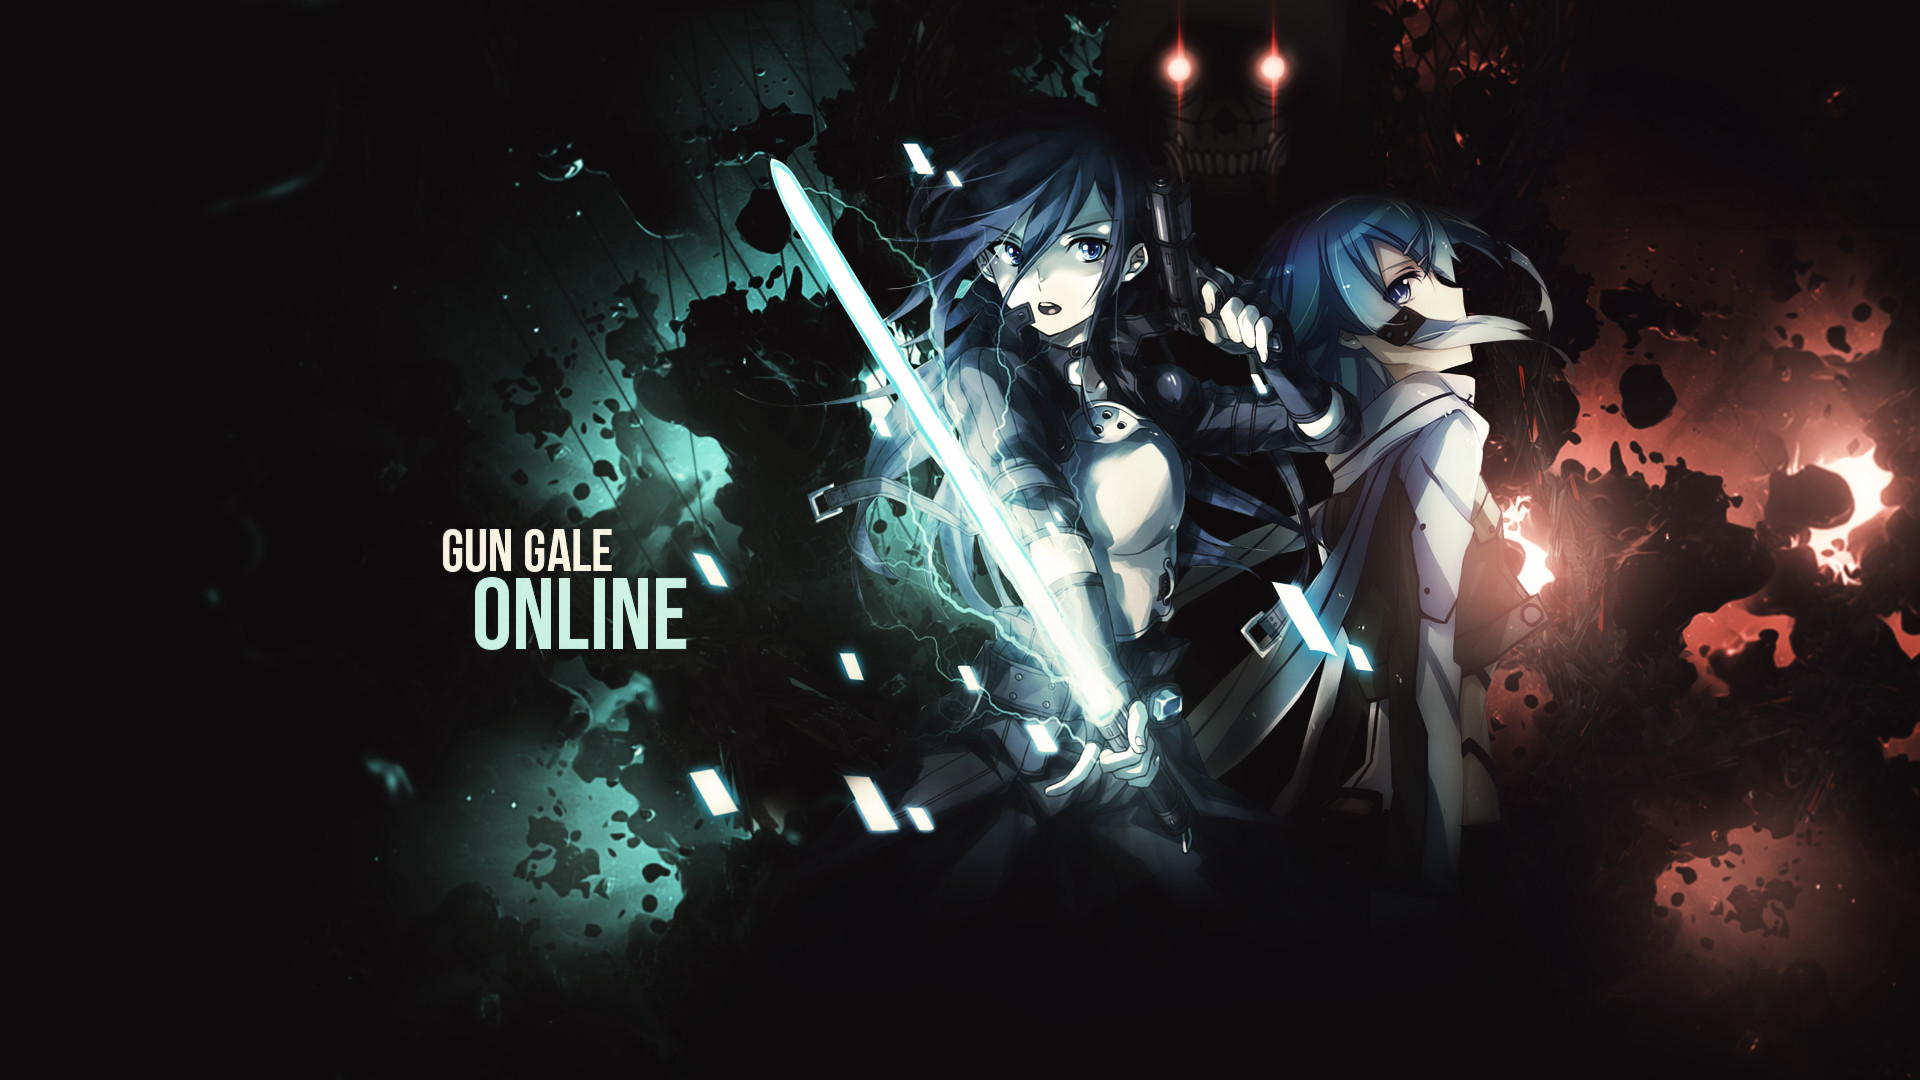 Death Gun Kirito Sinon Sword Art Online Sword Art Online II HD Wallpaper Background ID632568